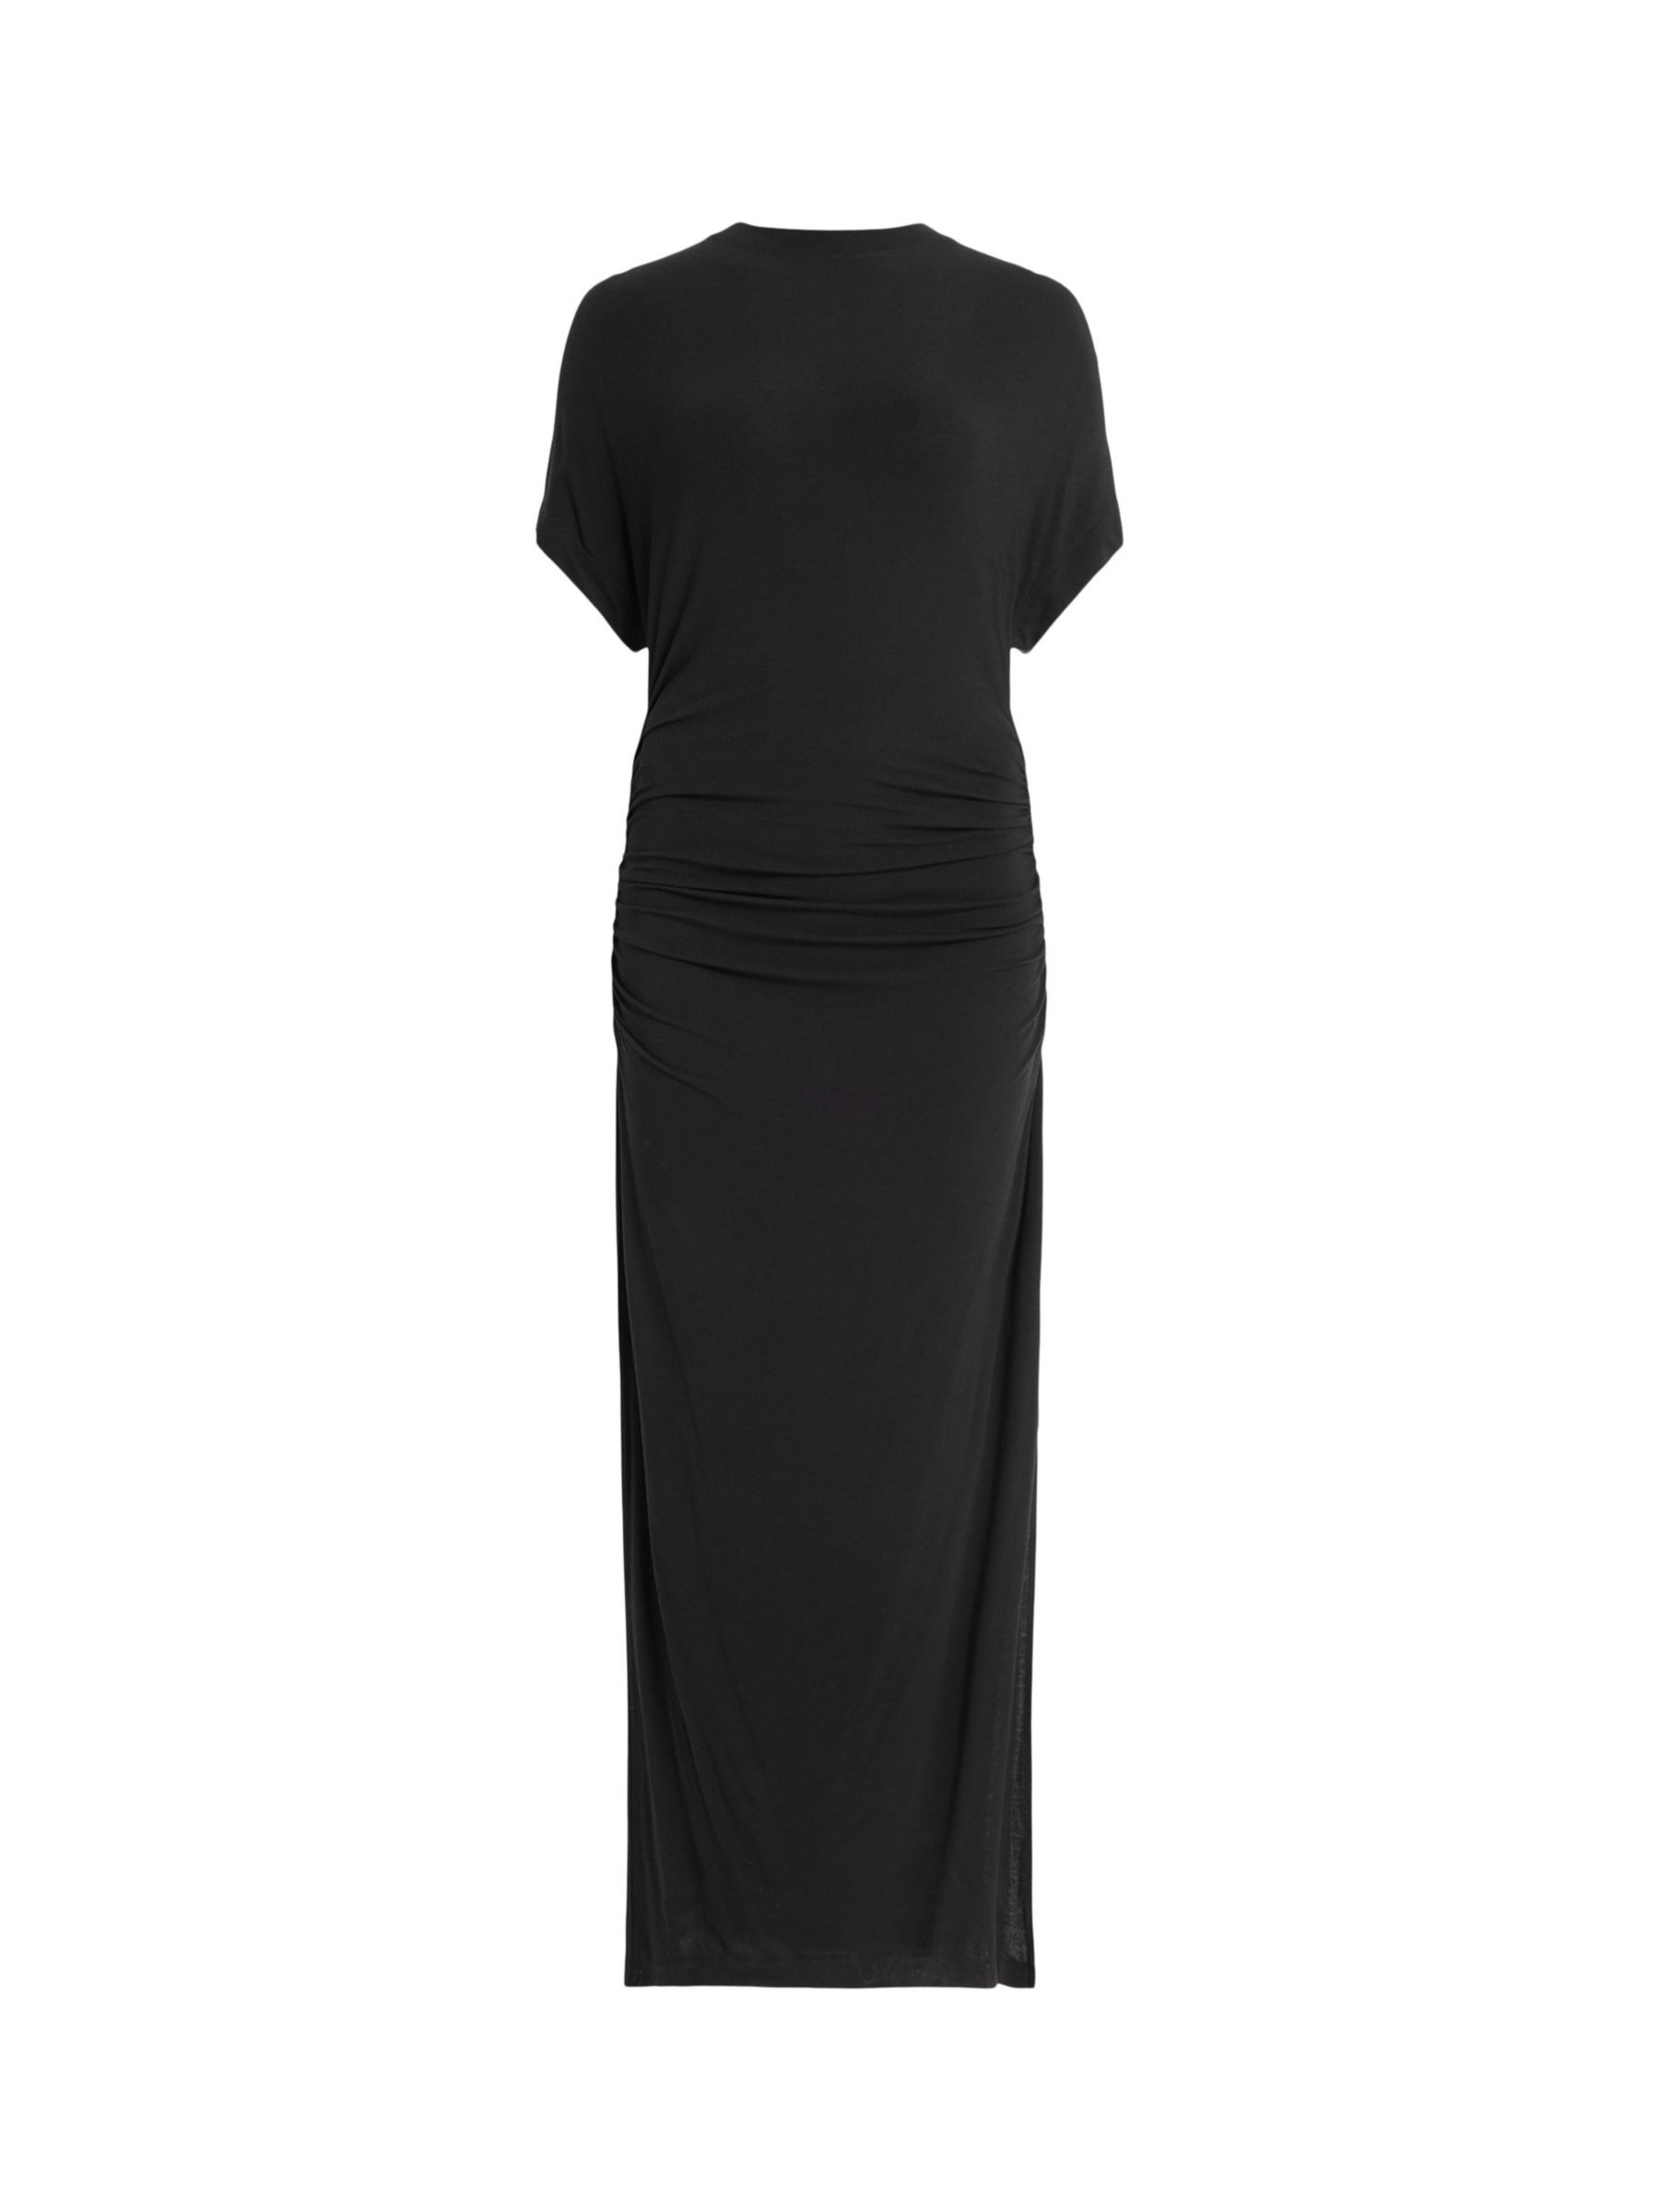 AllSaints Natalie Ruched Jersey Maxi Dress, Black at John Lewis & Partners